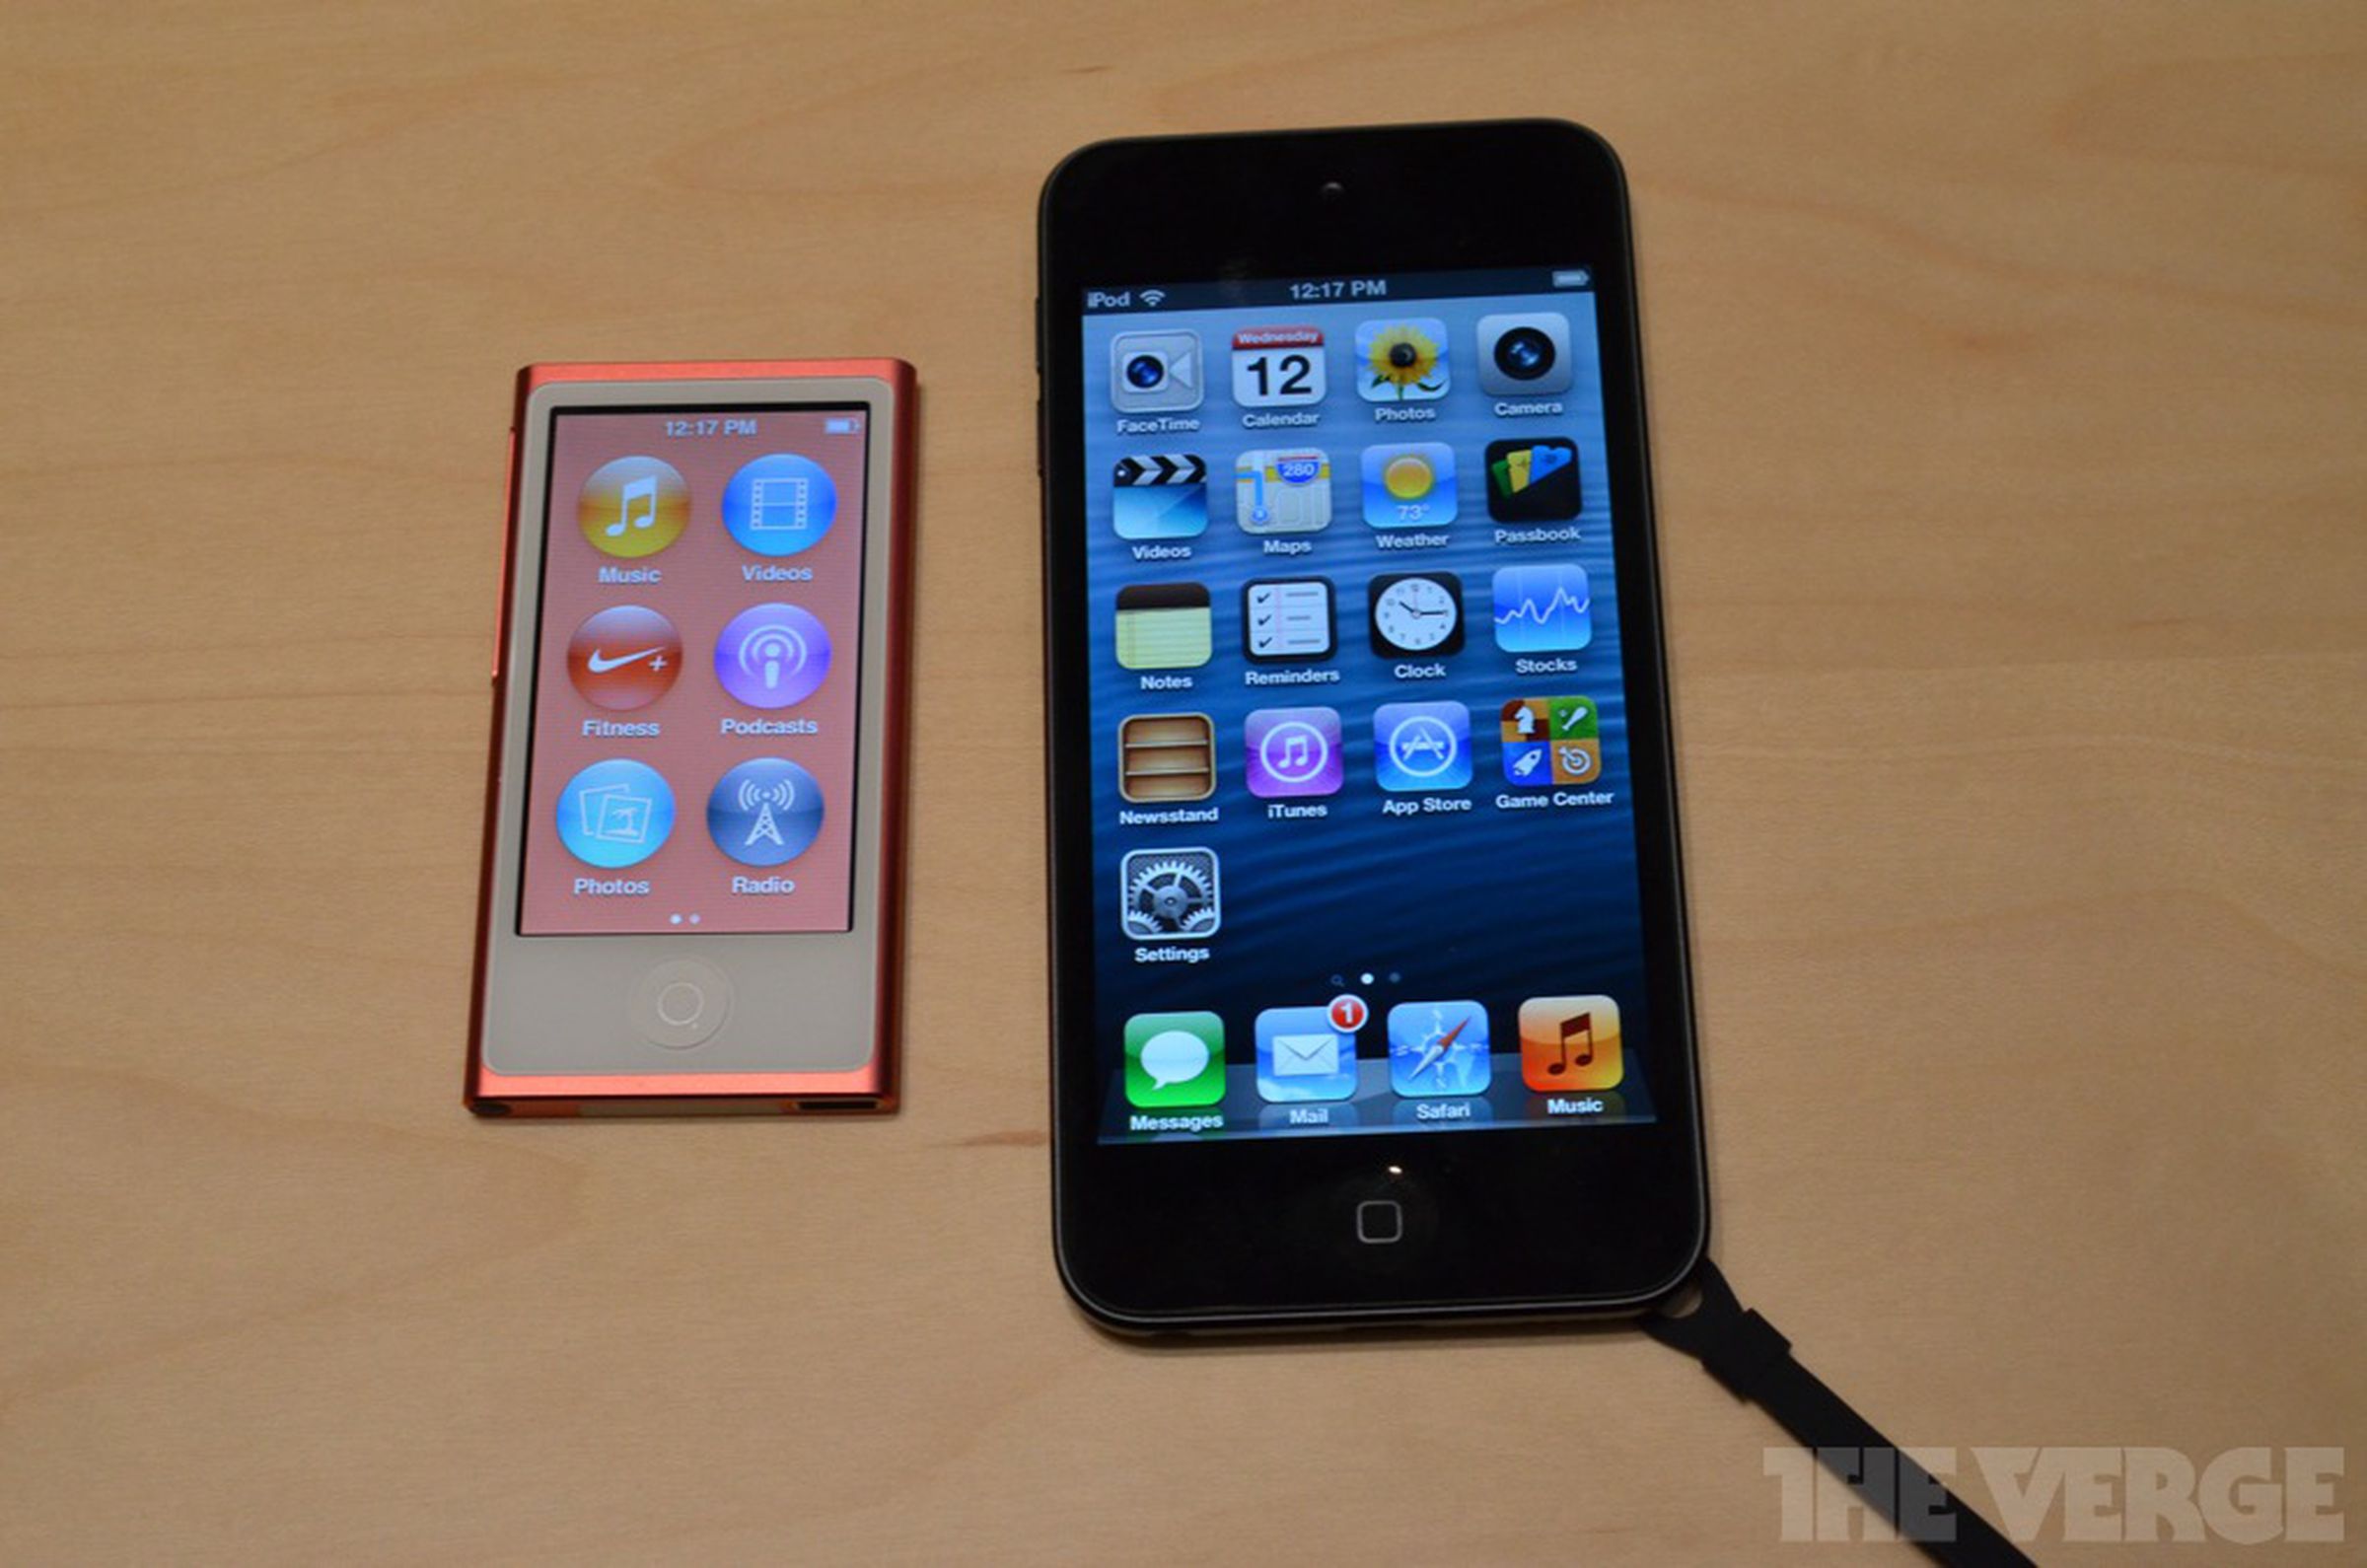 Apple's new iPod nano hands-on photo gallery